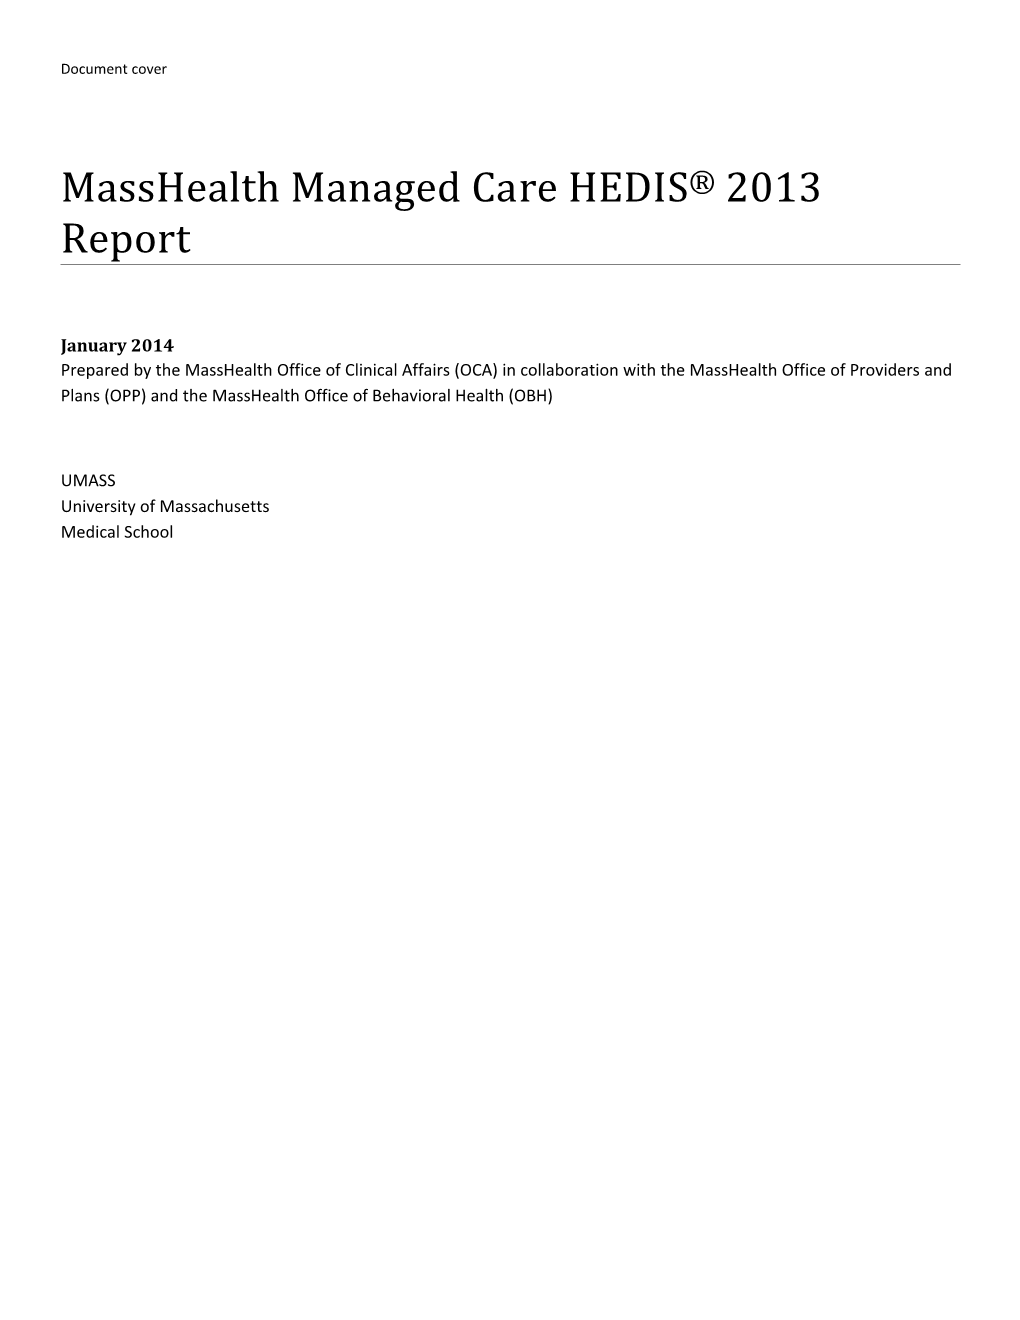 Masshealth Managed Care HEDIS 2013 Report